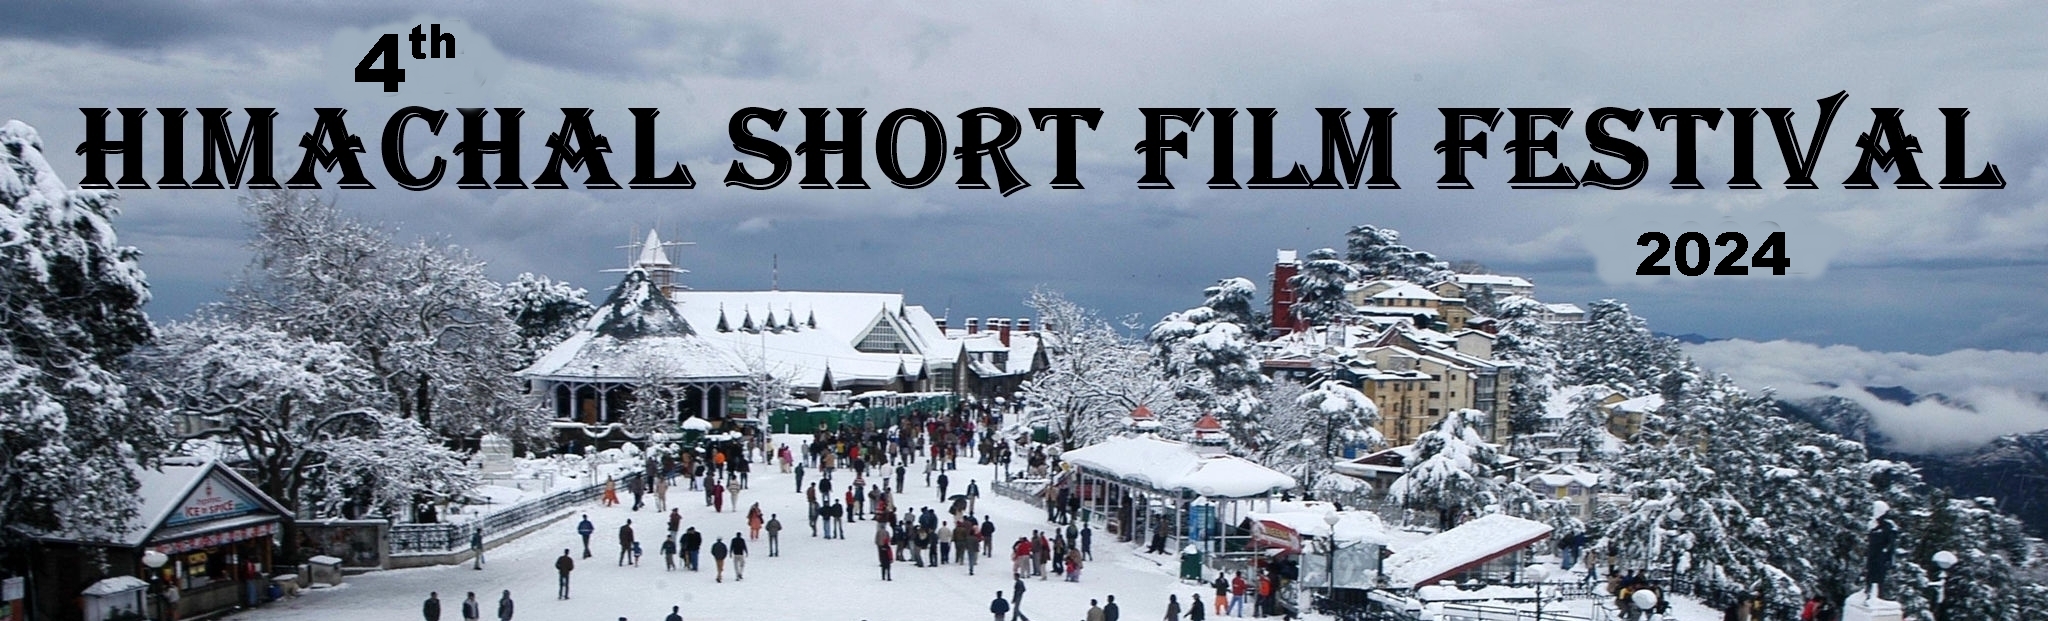 Himachal Short Film Festival